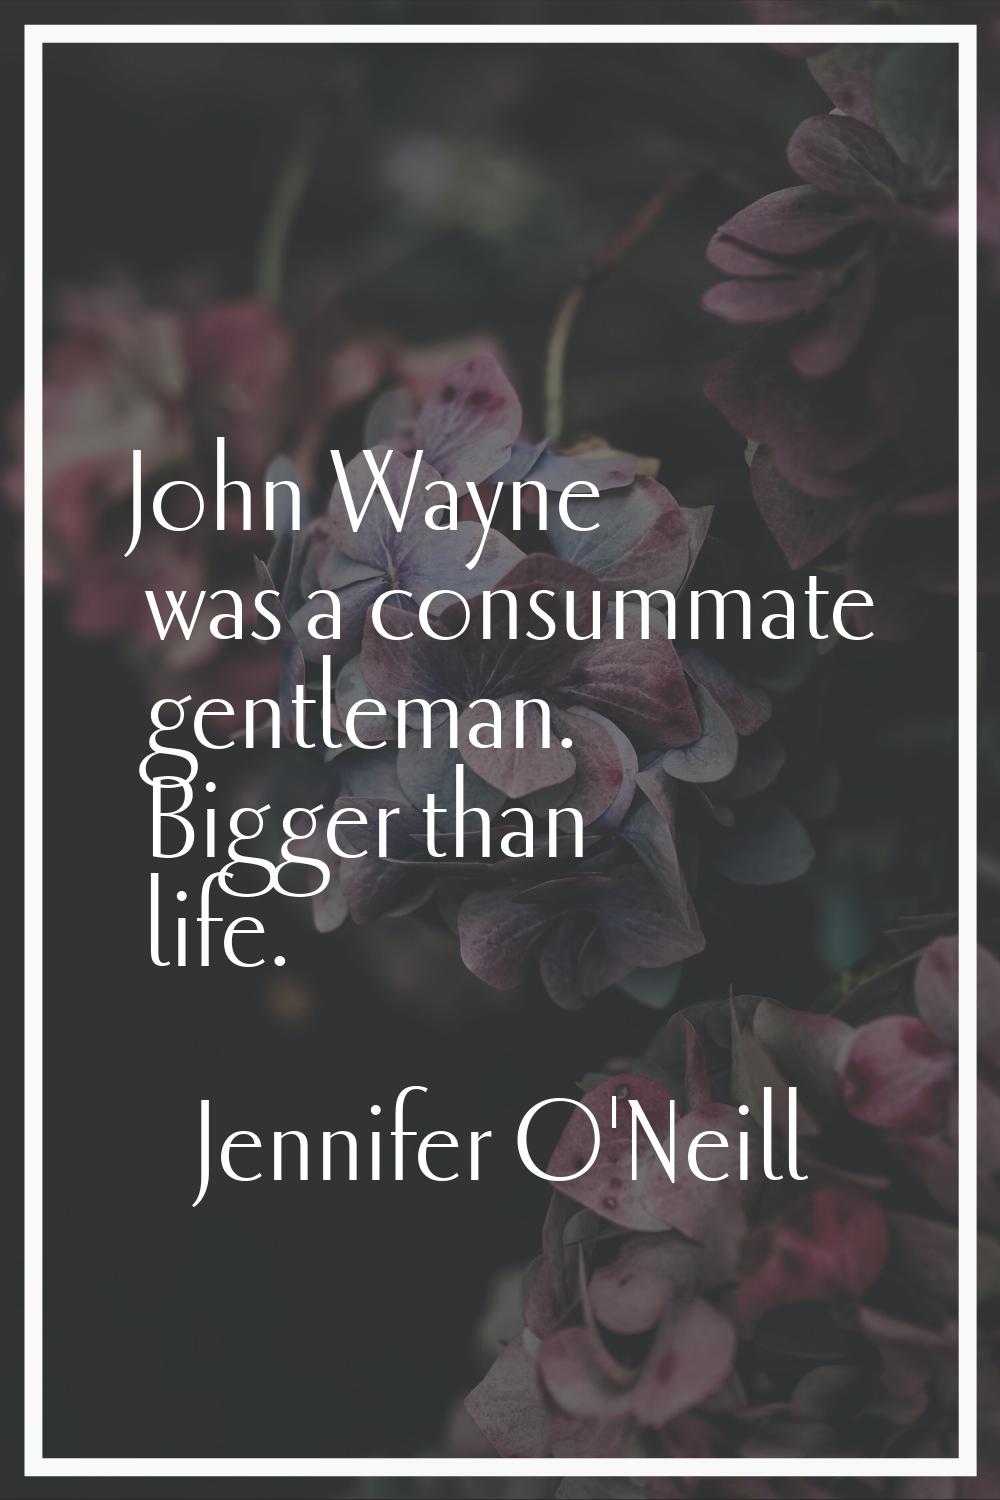 John Wayne was a consummate gentleman. Bigger than life.